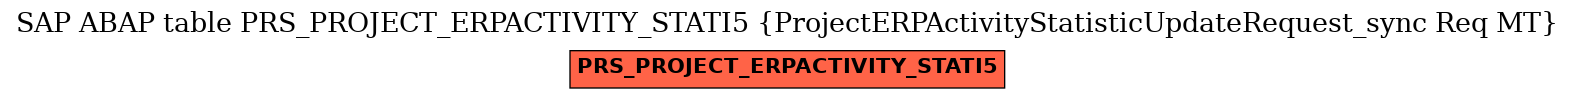 E-R Diagram for table PRS_PROJECT_ERPACTIVITY_STATI5 (ProjectERPActivityStatisticUpdateRequest_sync Req MT)